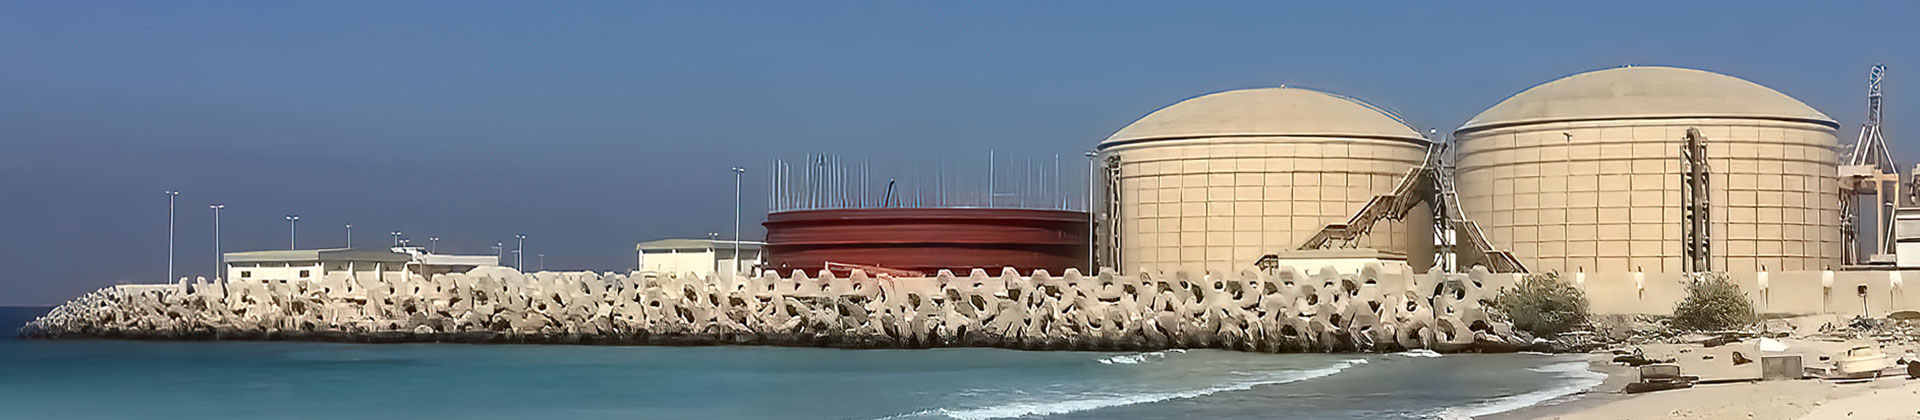 Desalination tanks